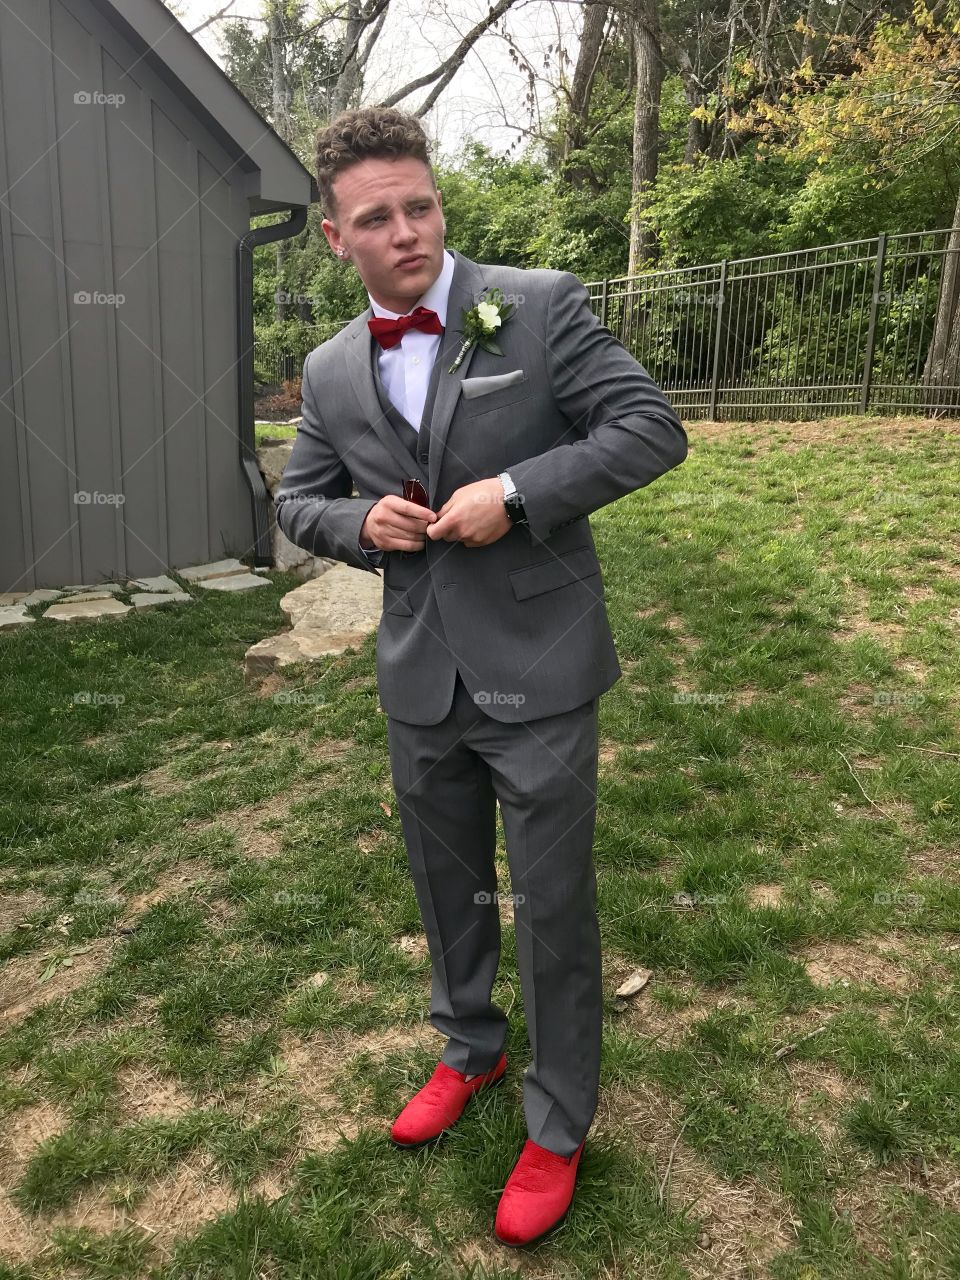 Senior prom male in tuxedo